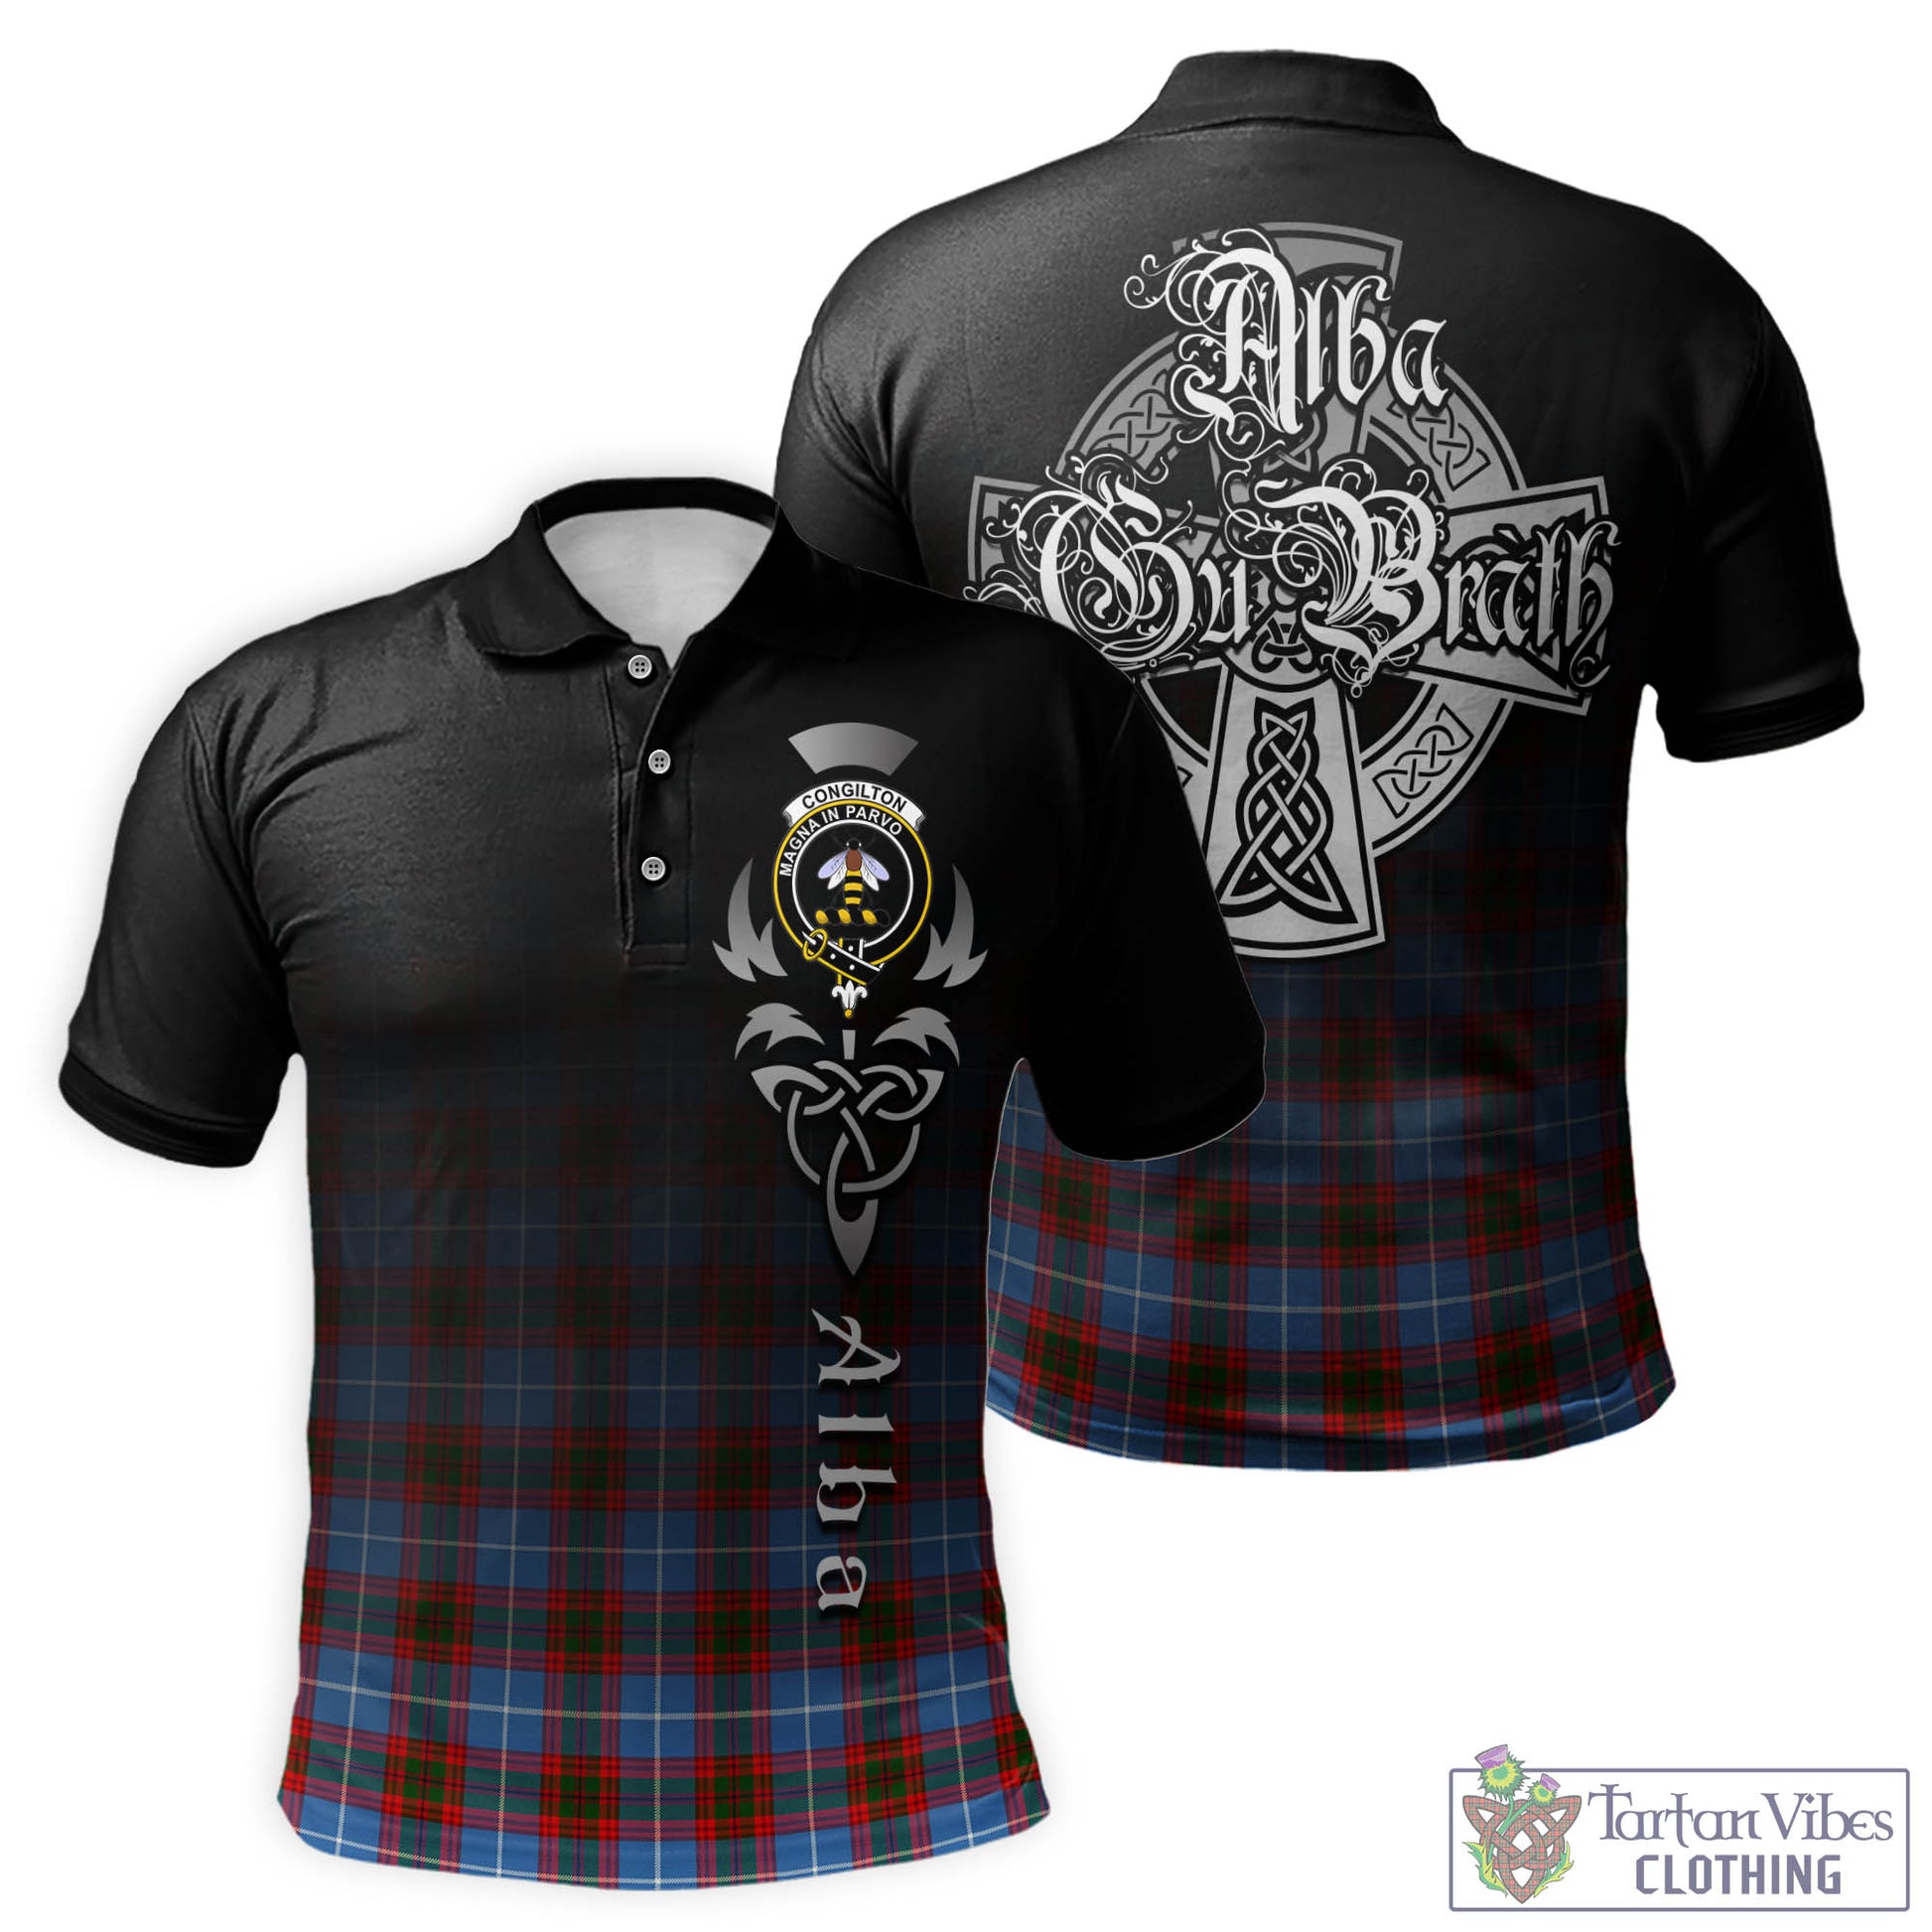 Tartan Vibes Clothing Congilton Tartan Polo Shirt Featuring Alba Gu Brath Family Crest Celtic Inspired